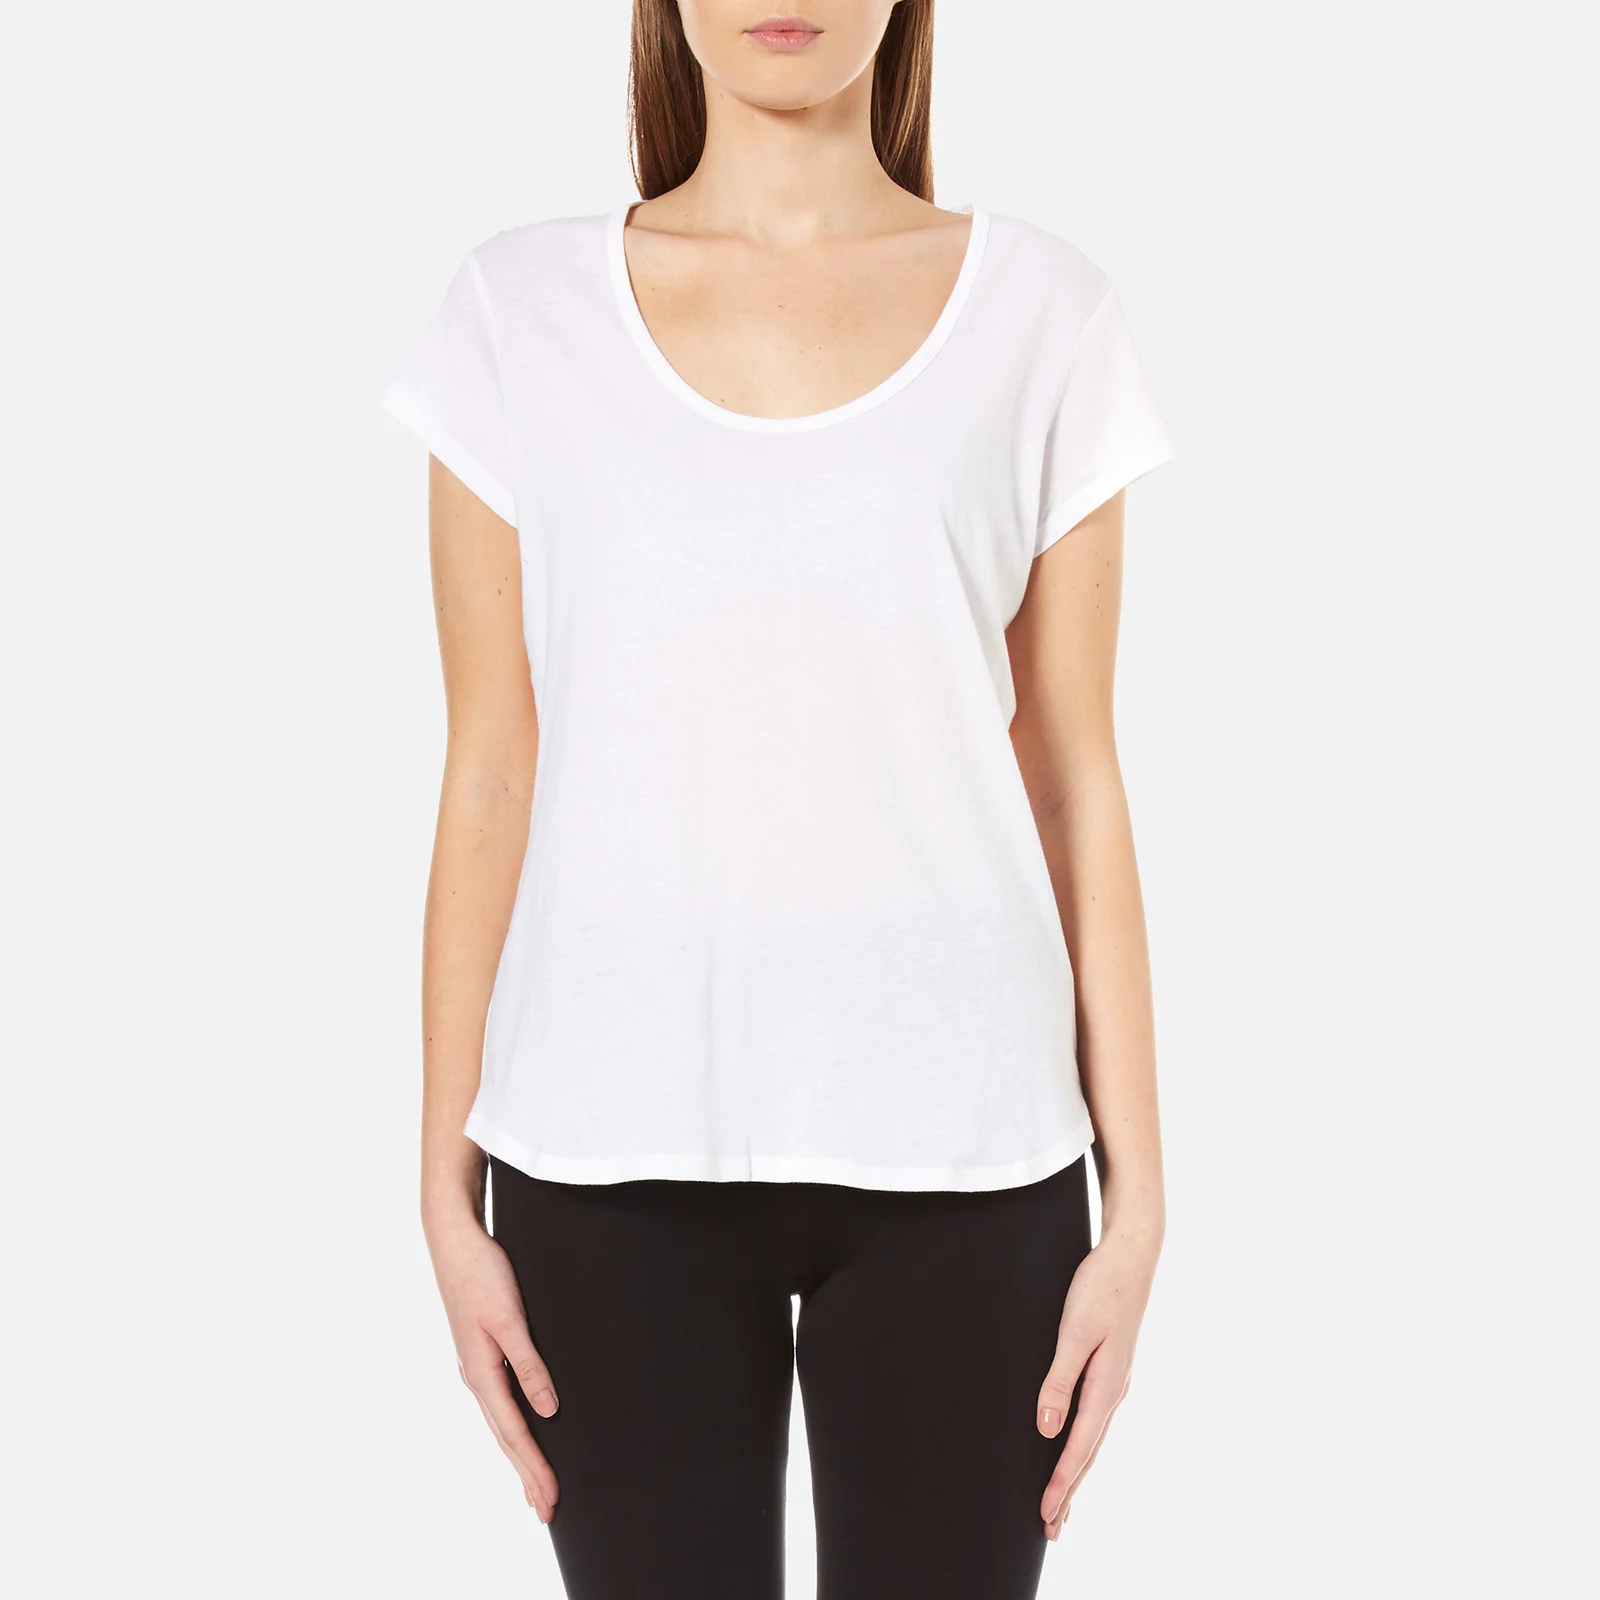 UGG Women's Betty Brushed Jersey Knit Short Sleeve T-Shirt - White Image 1